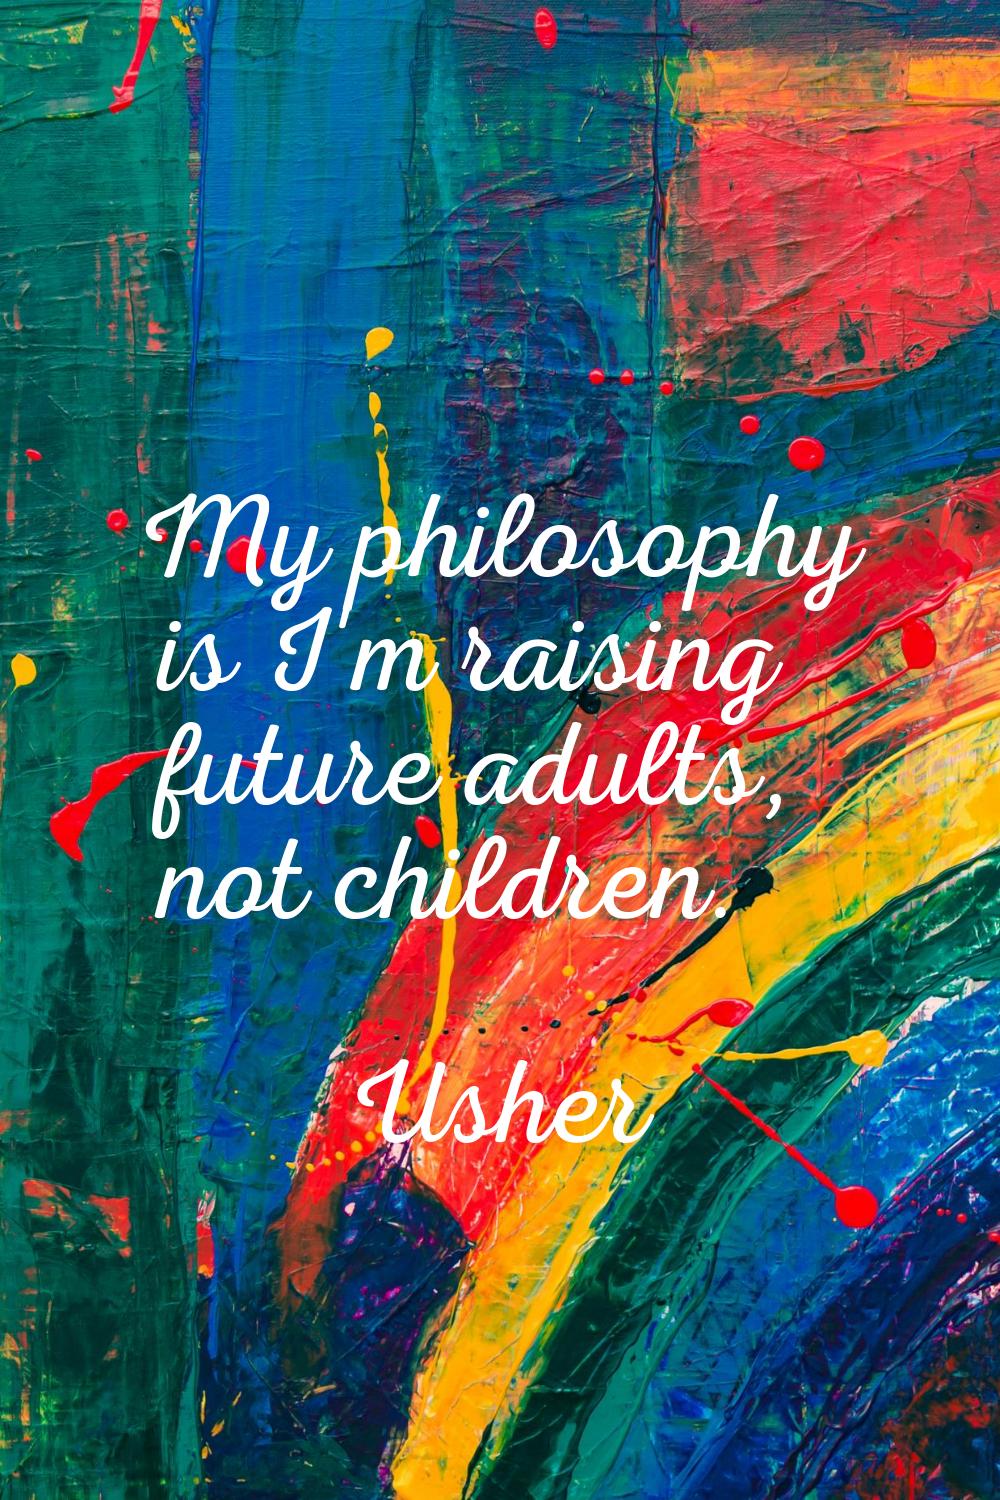 My philosophy is I'm raising future adults, not children.